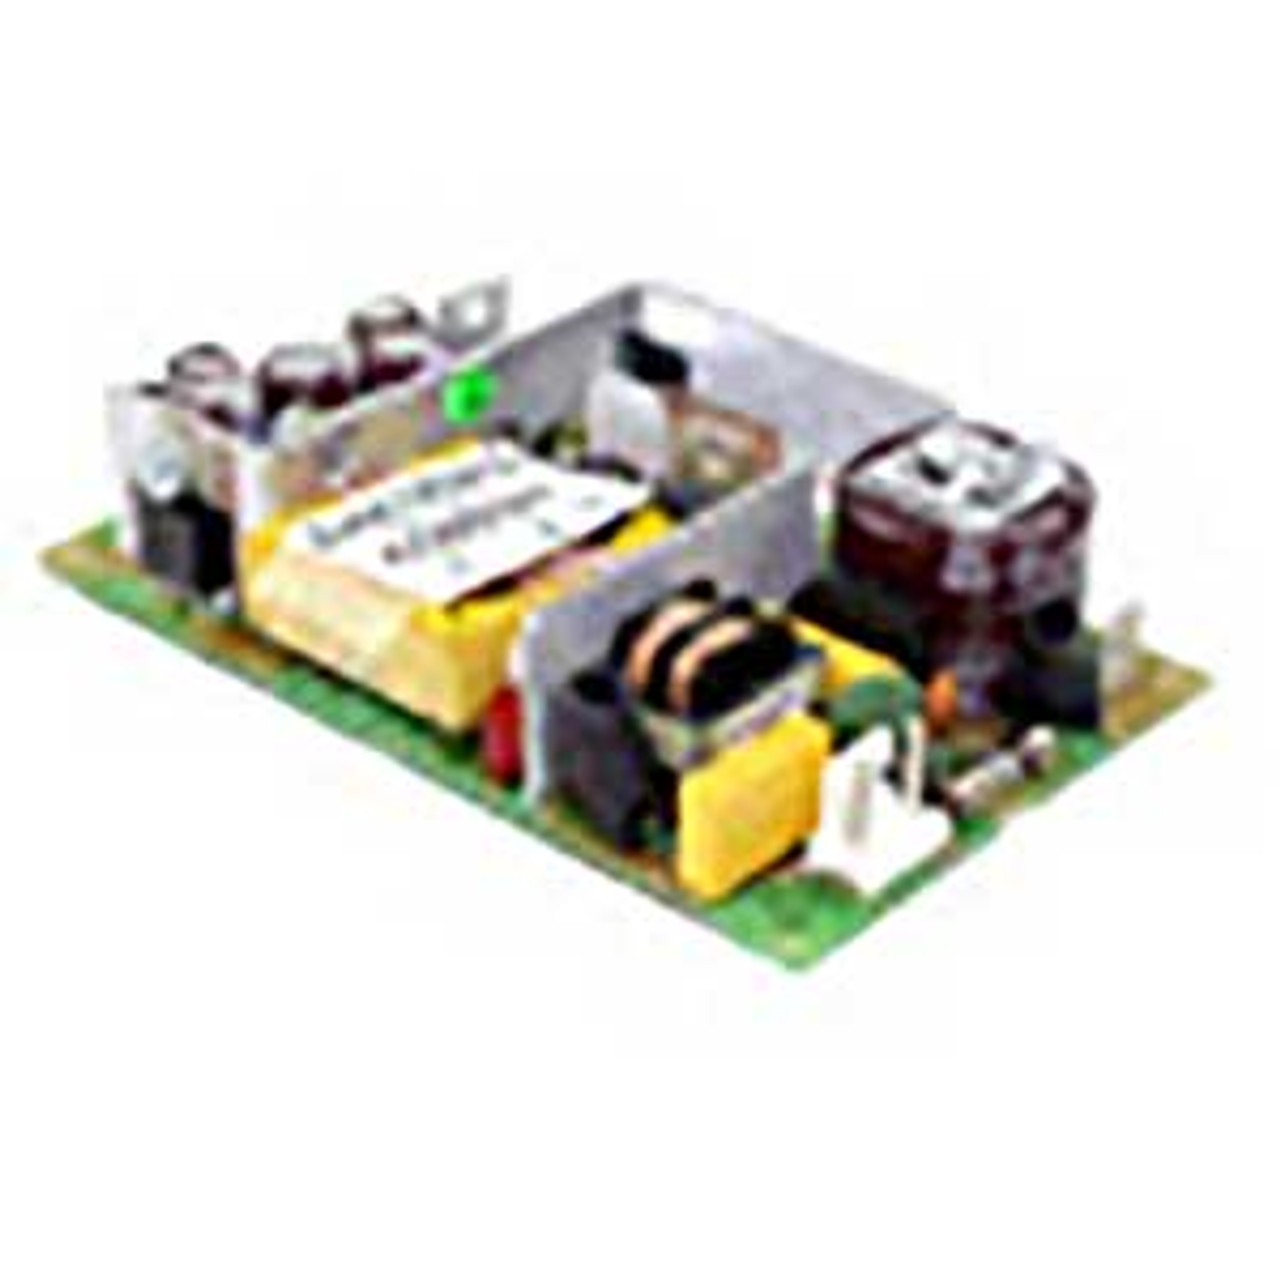 640B0060H01 - Power Supply